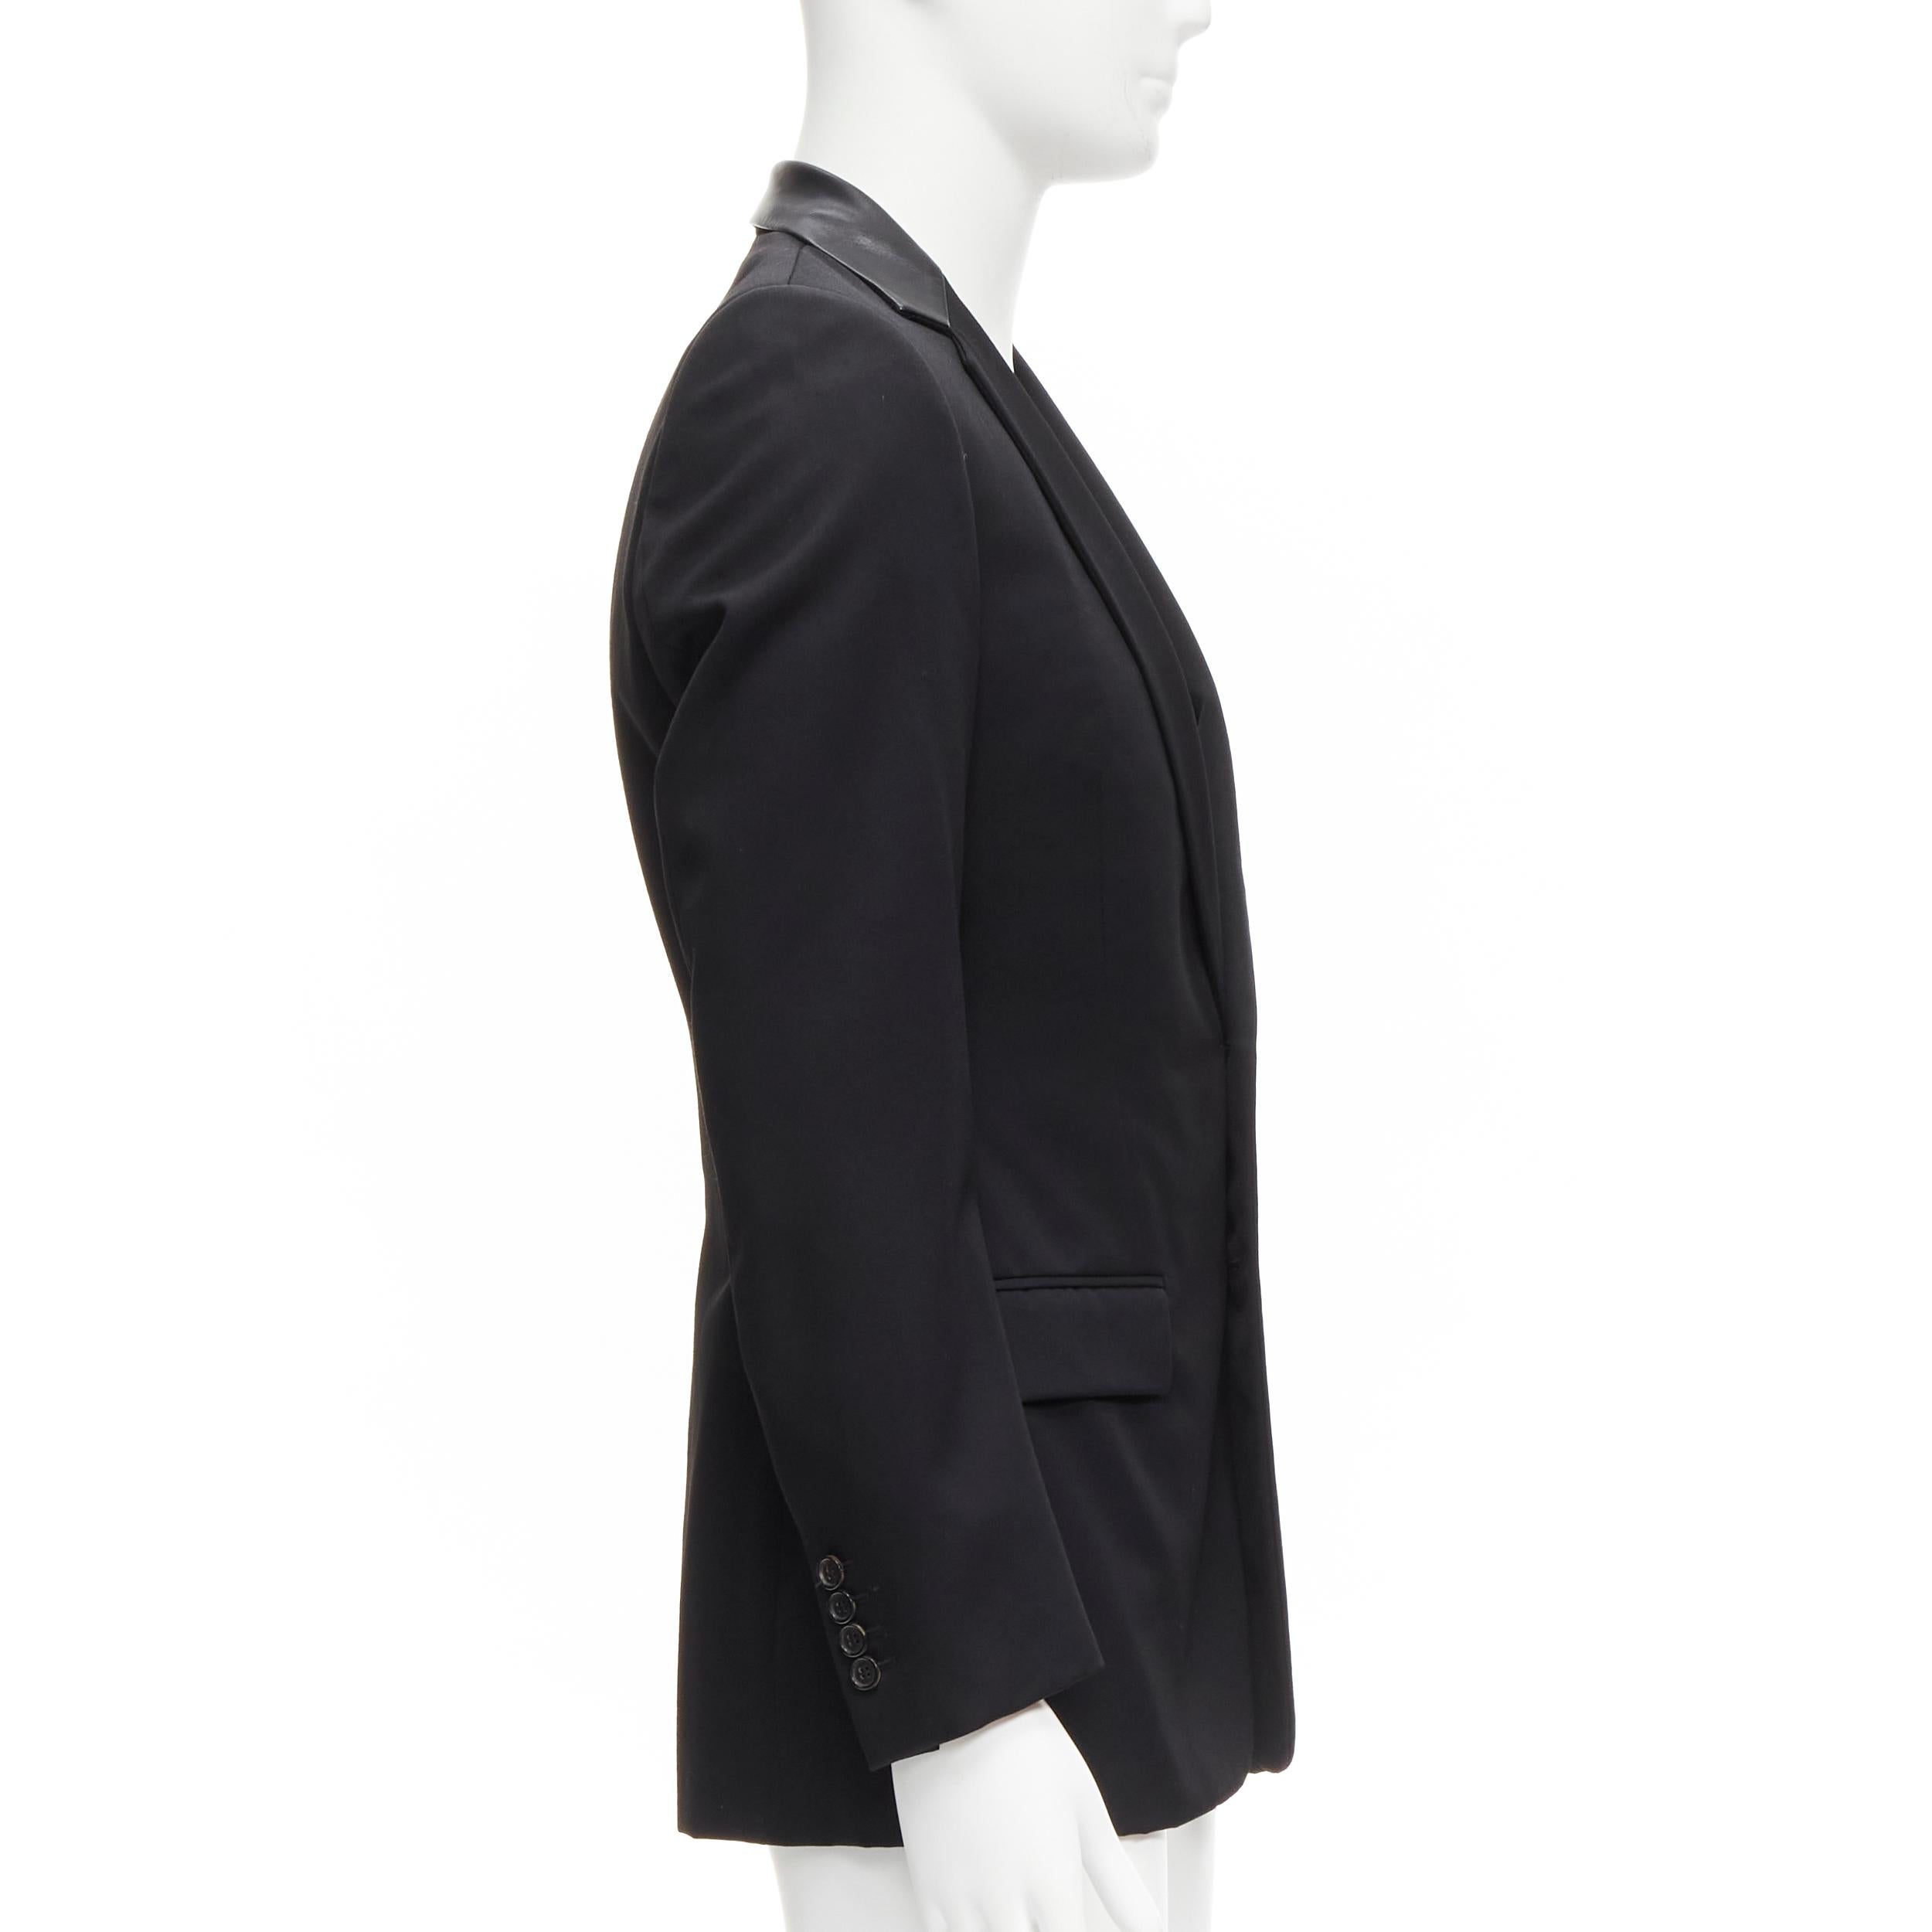 DIOR HOMME Hedi Slimane leather collar classic 2-button blazer jacket FR46 S For Sale 1